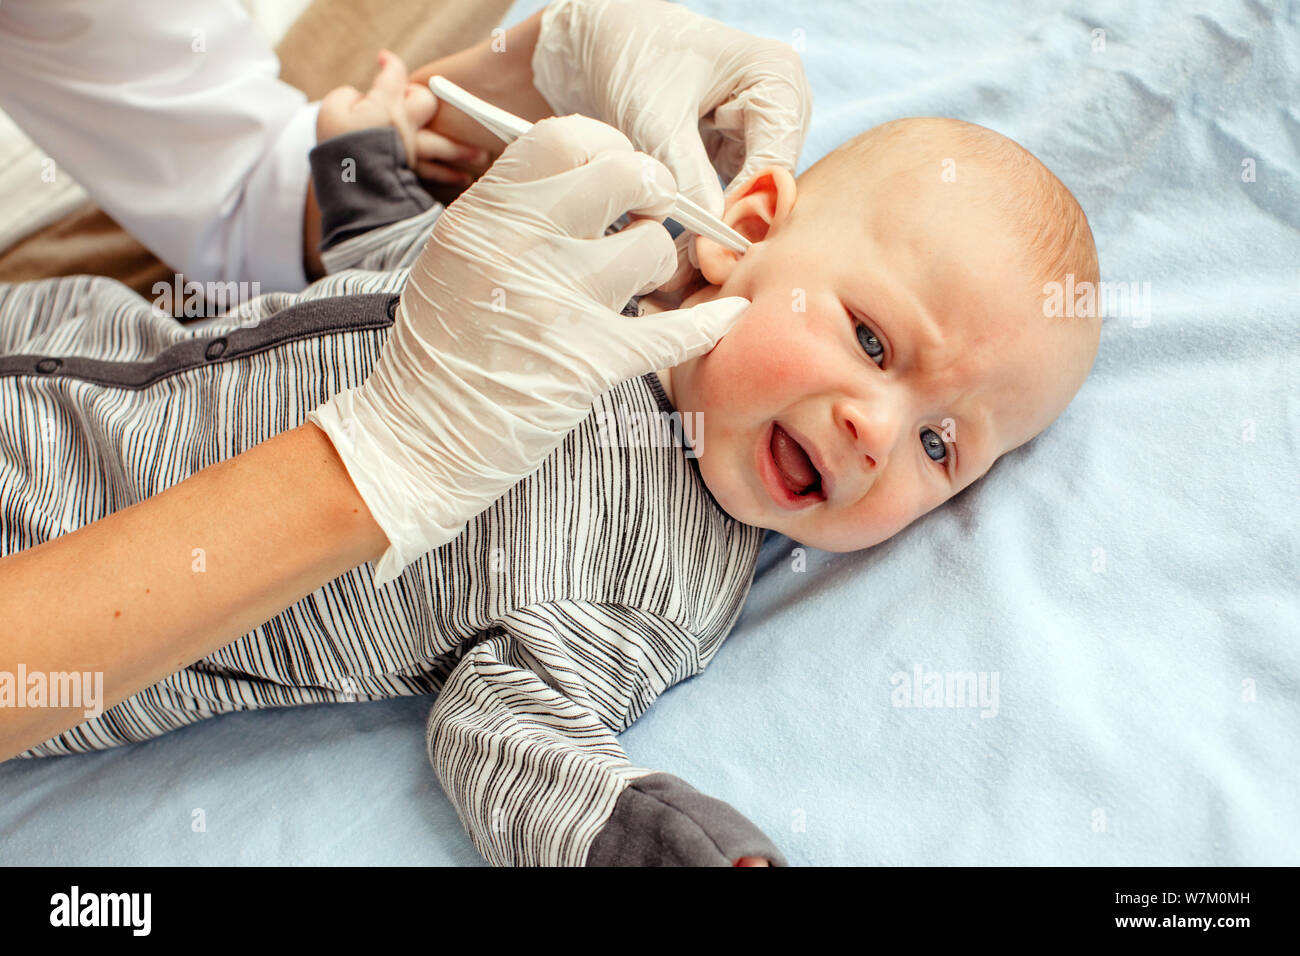 Nurse cleaning ear of newborn baby Stock Photo